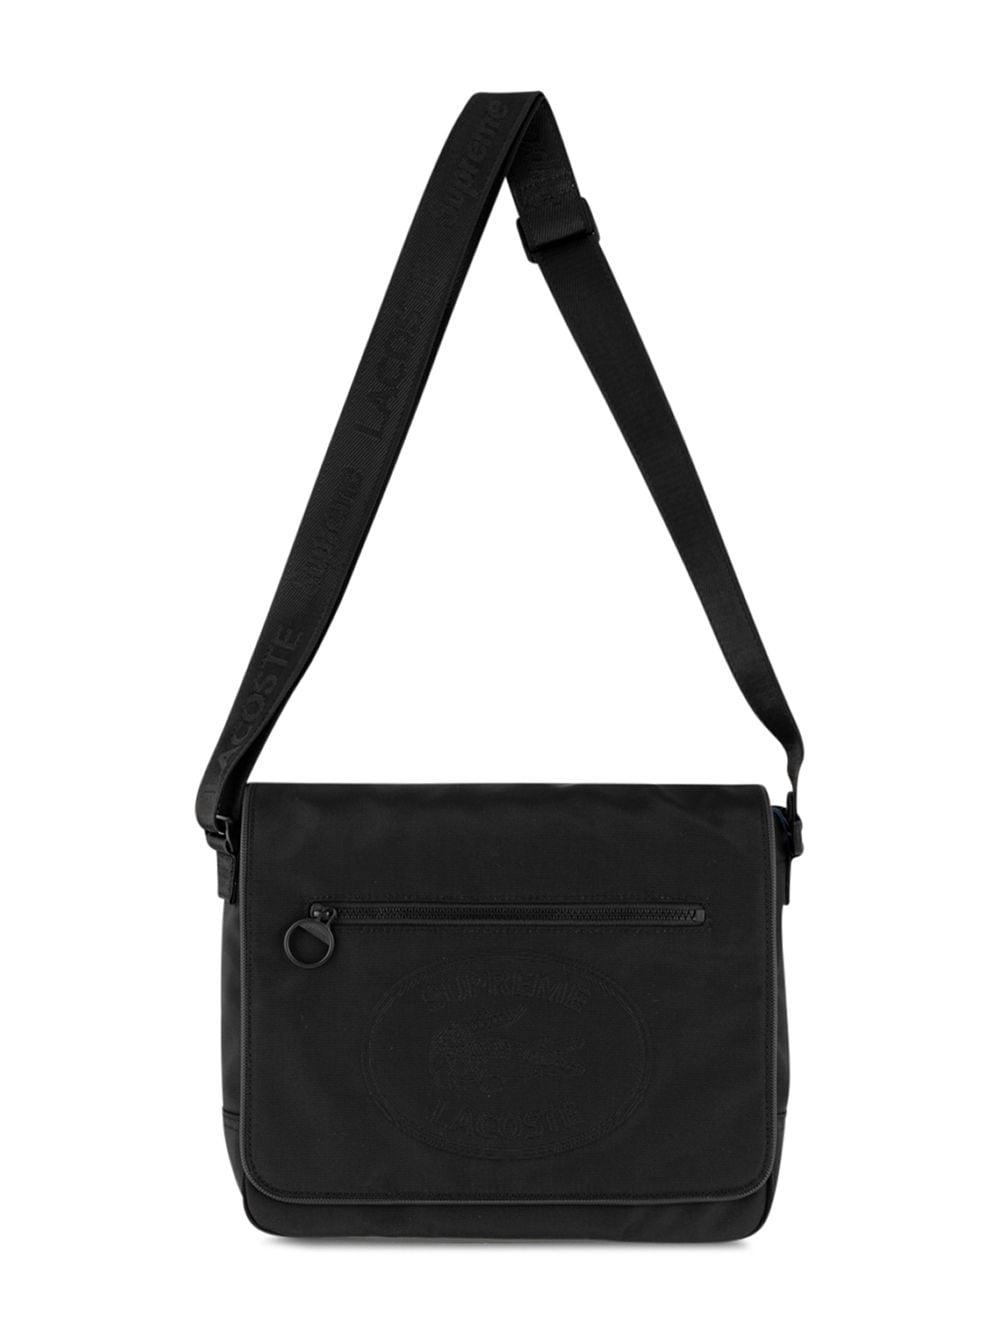 Supreme X Lacoste Messenger Bag in Black - Lyst